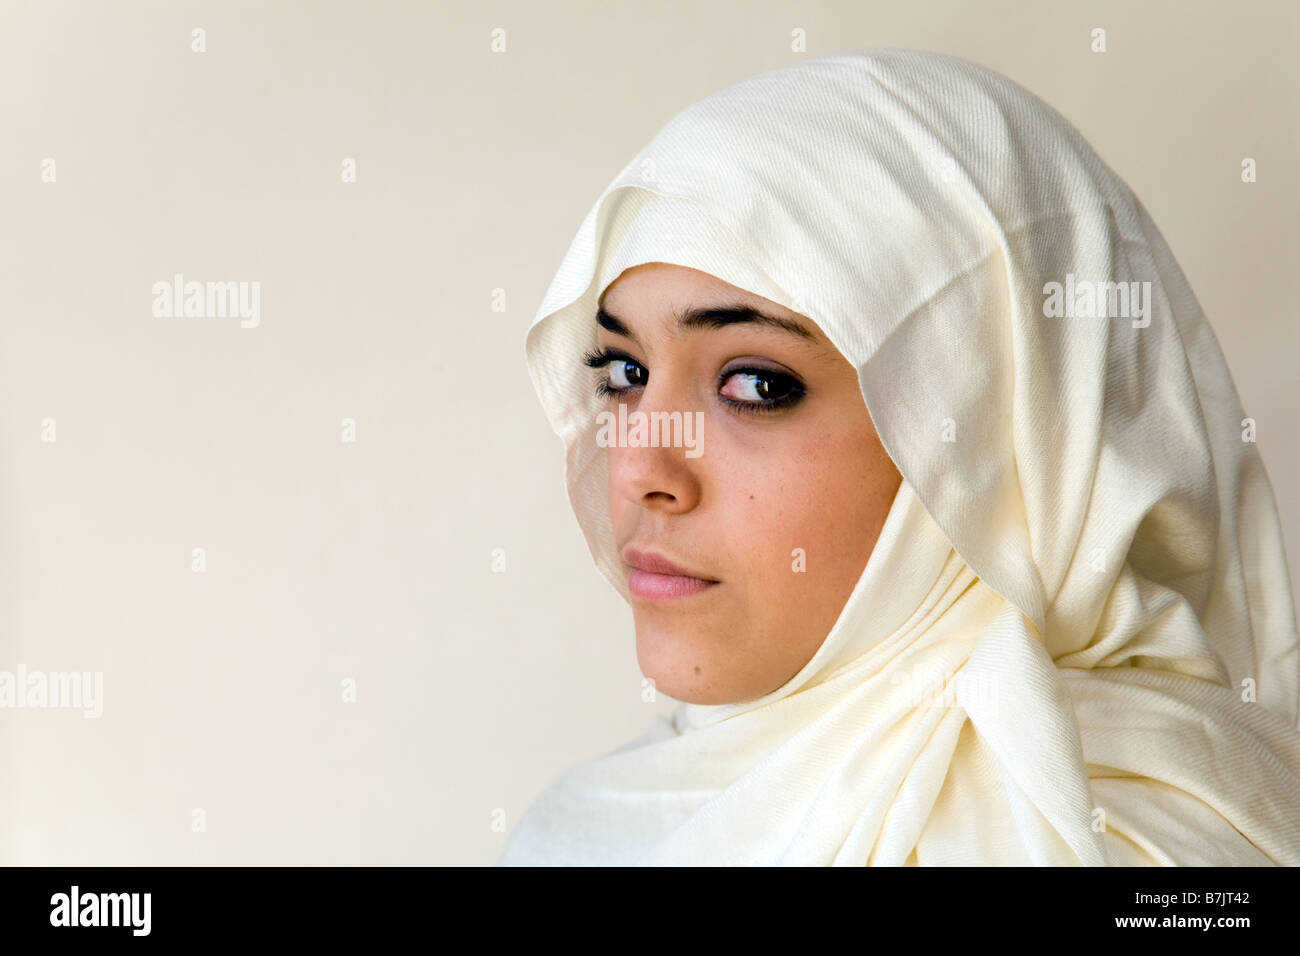 Of hijab wearing pics girls Young girls